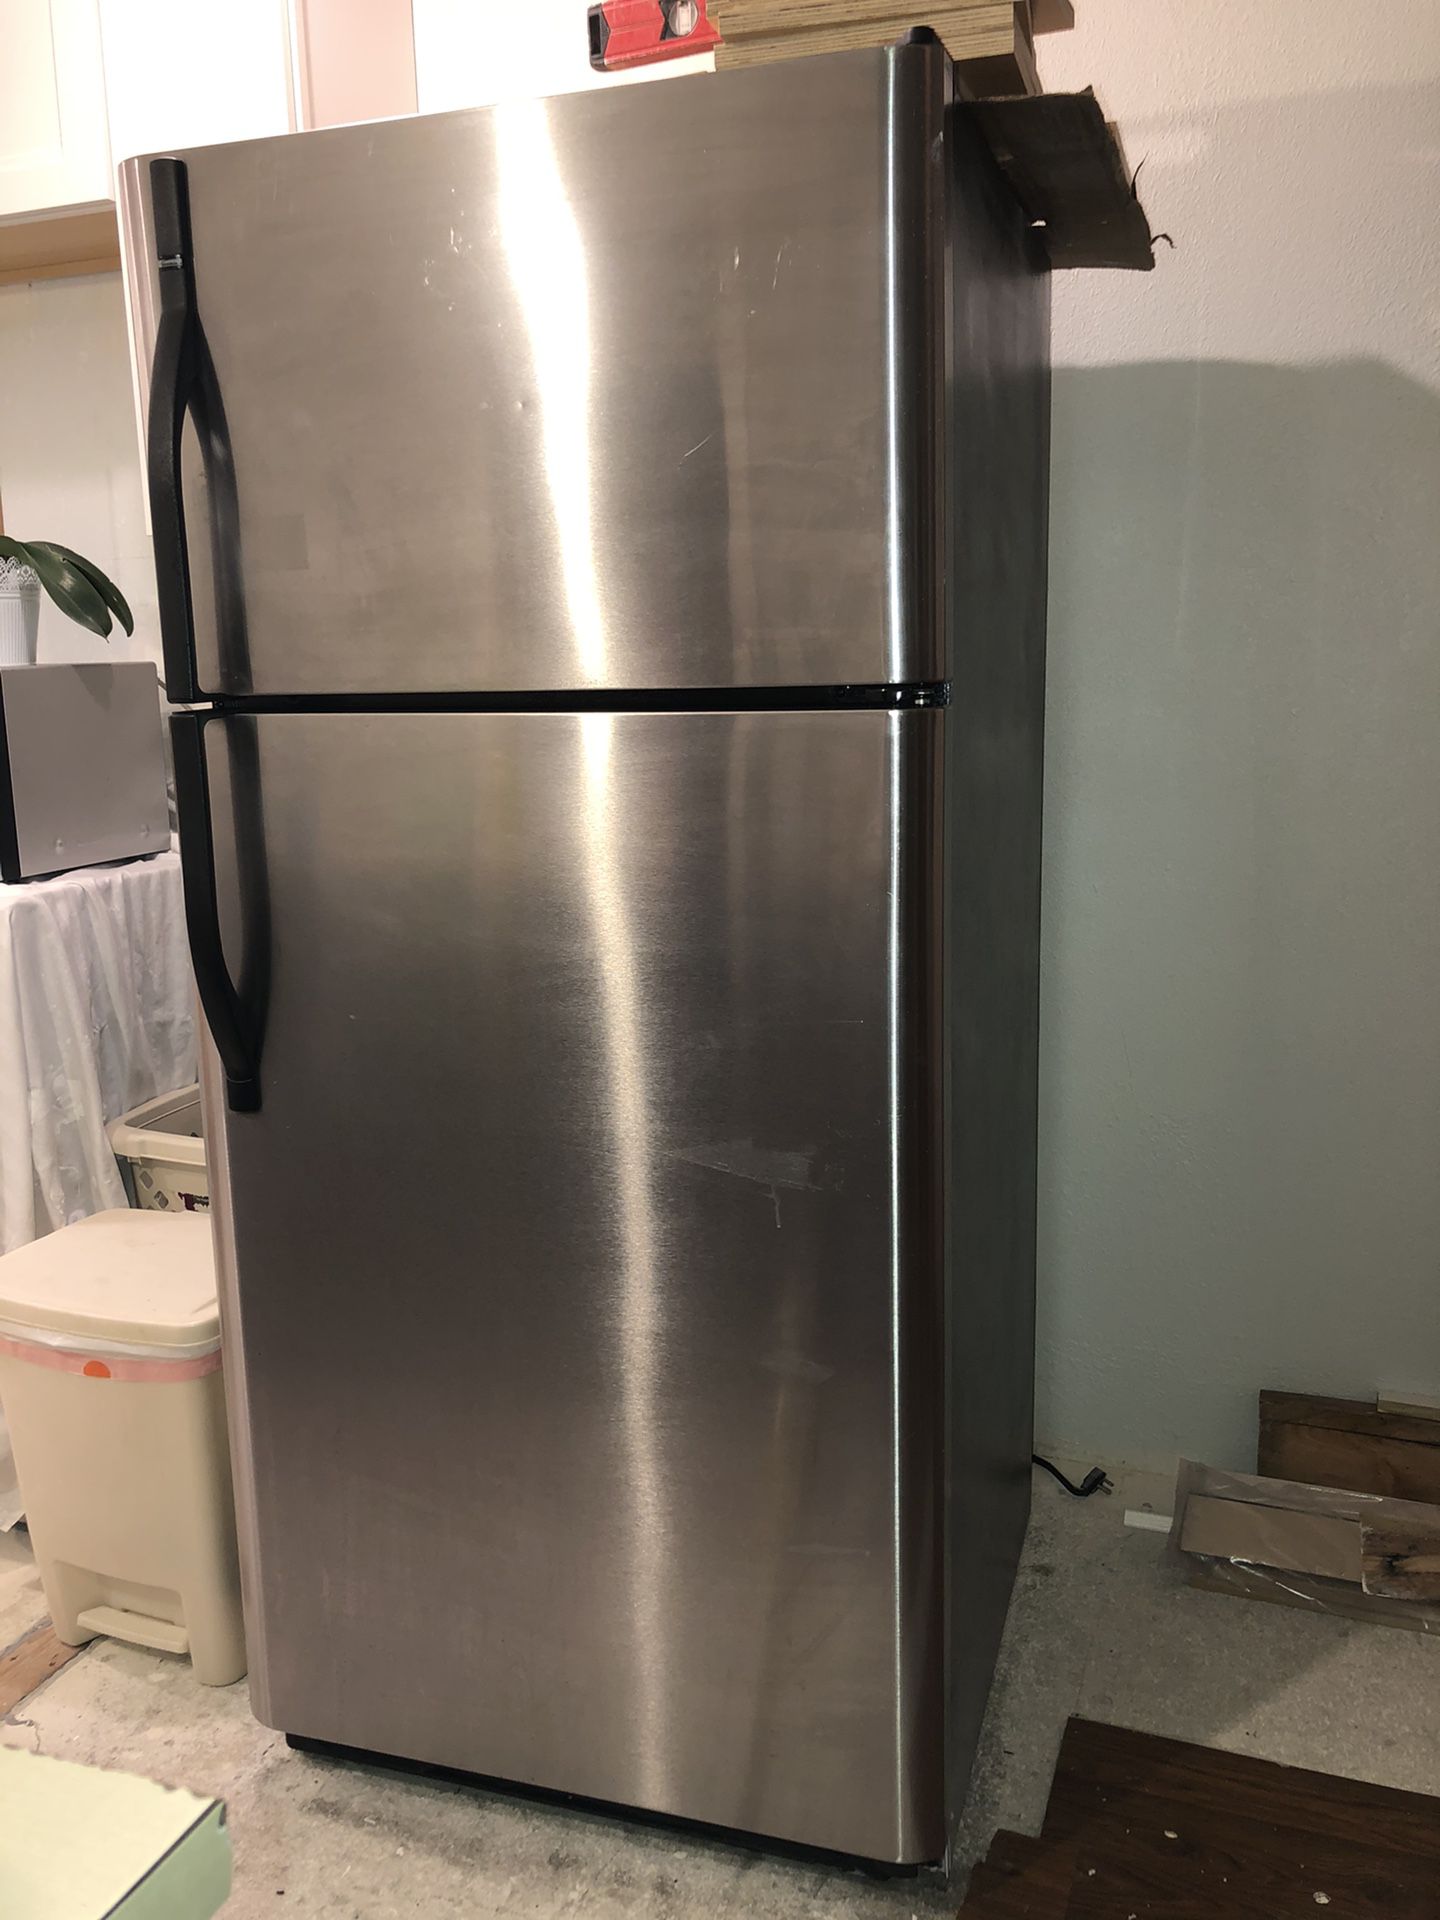 Kenmore stainless steel refrigerator